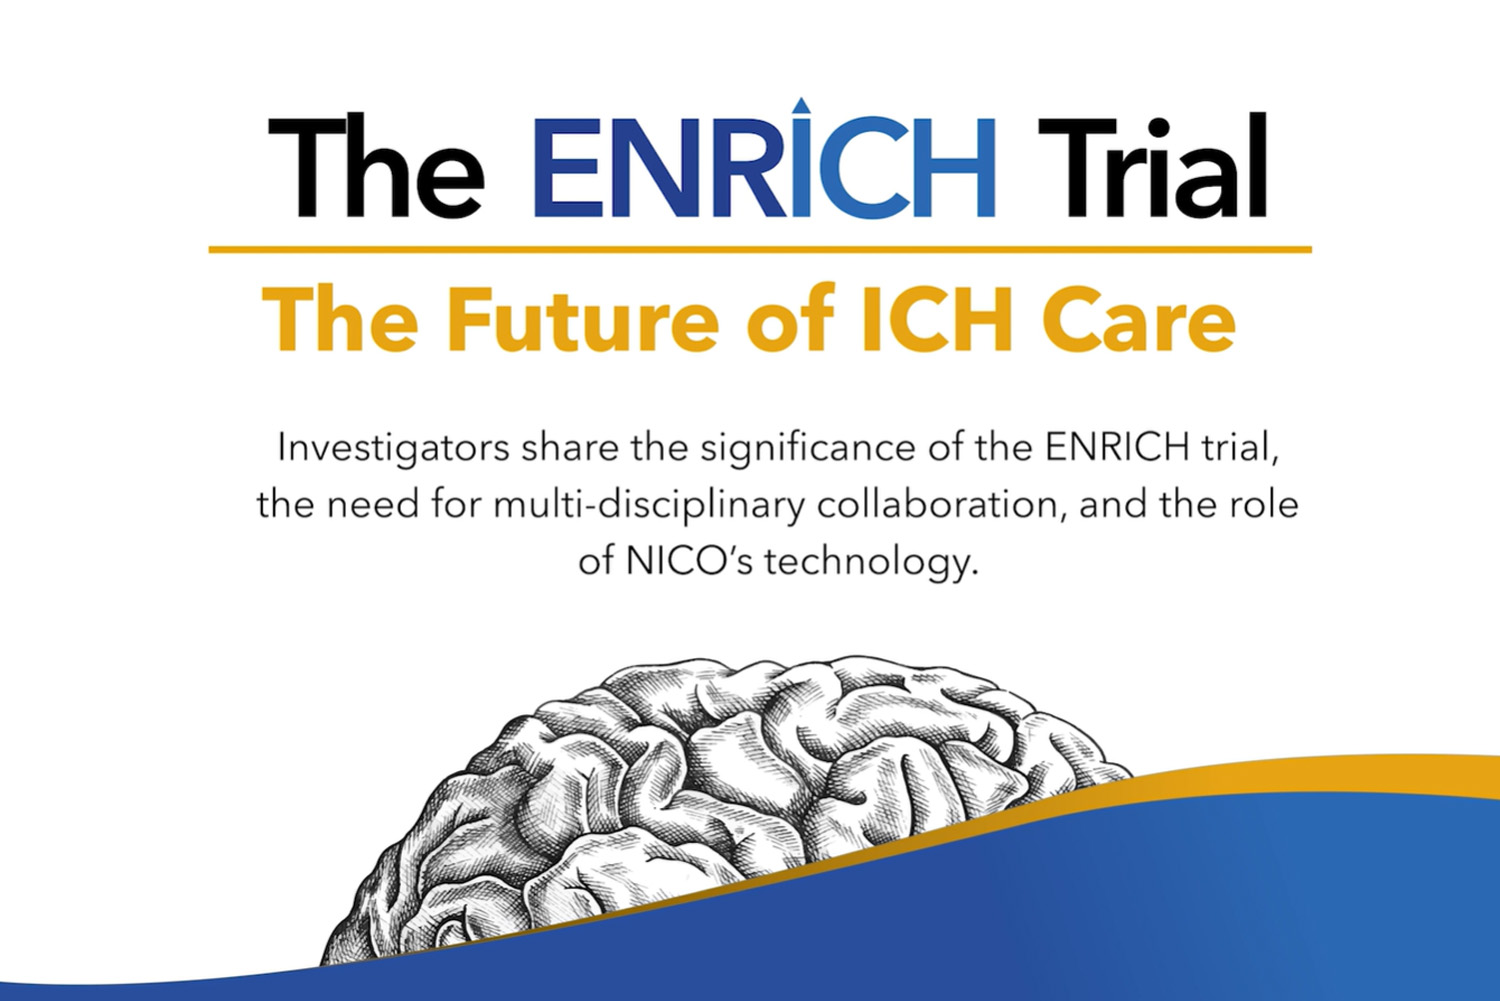 NEJM Publishes ENRICH Trial Data with NICO Tech